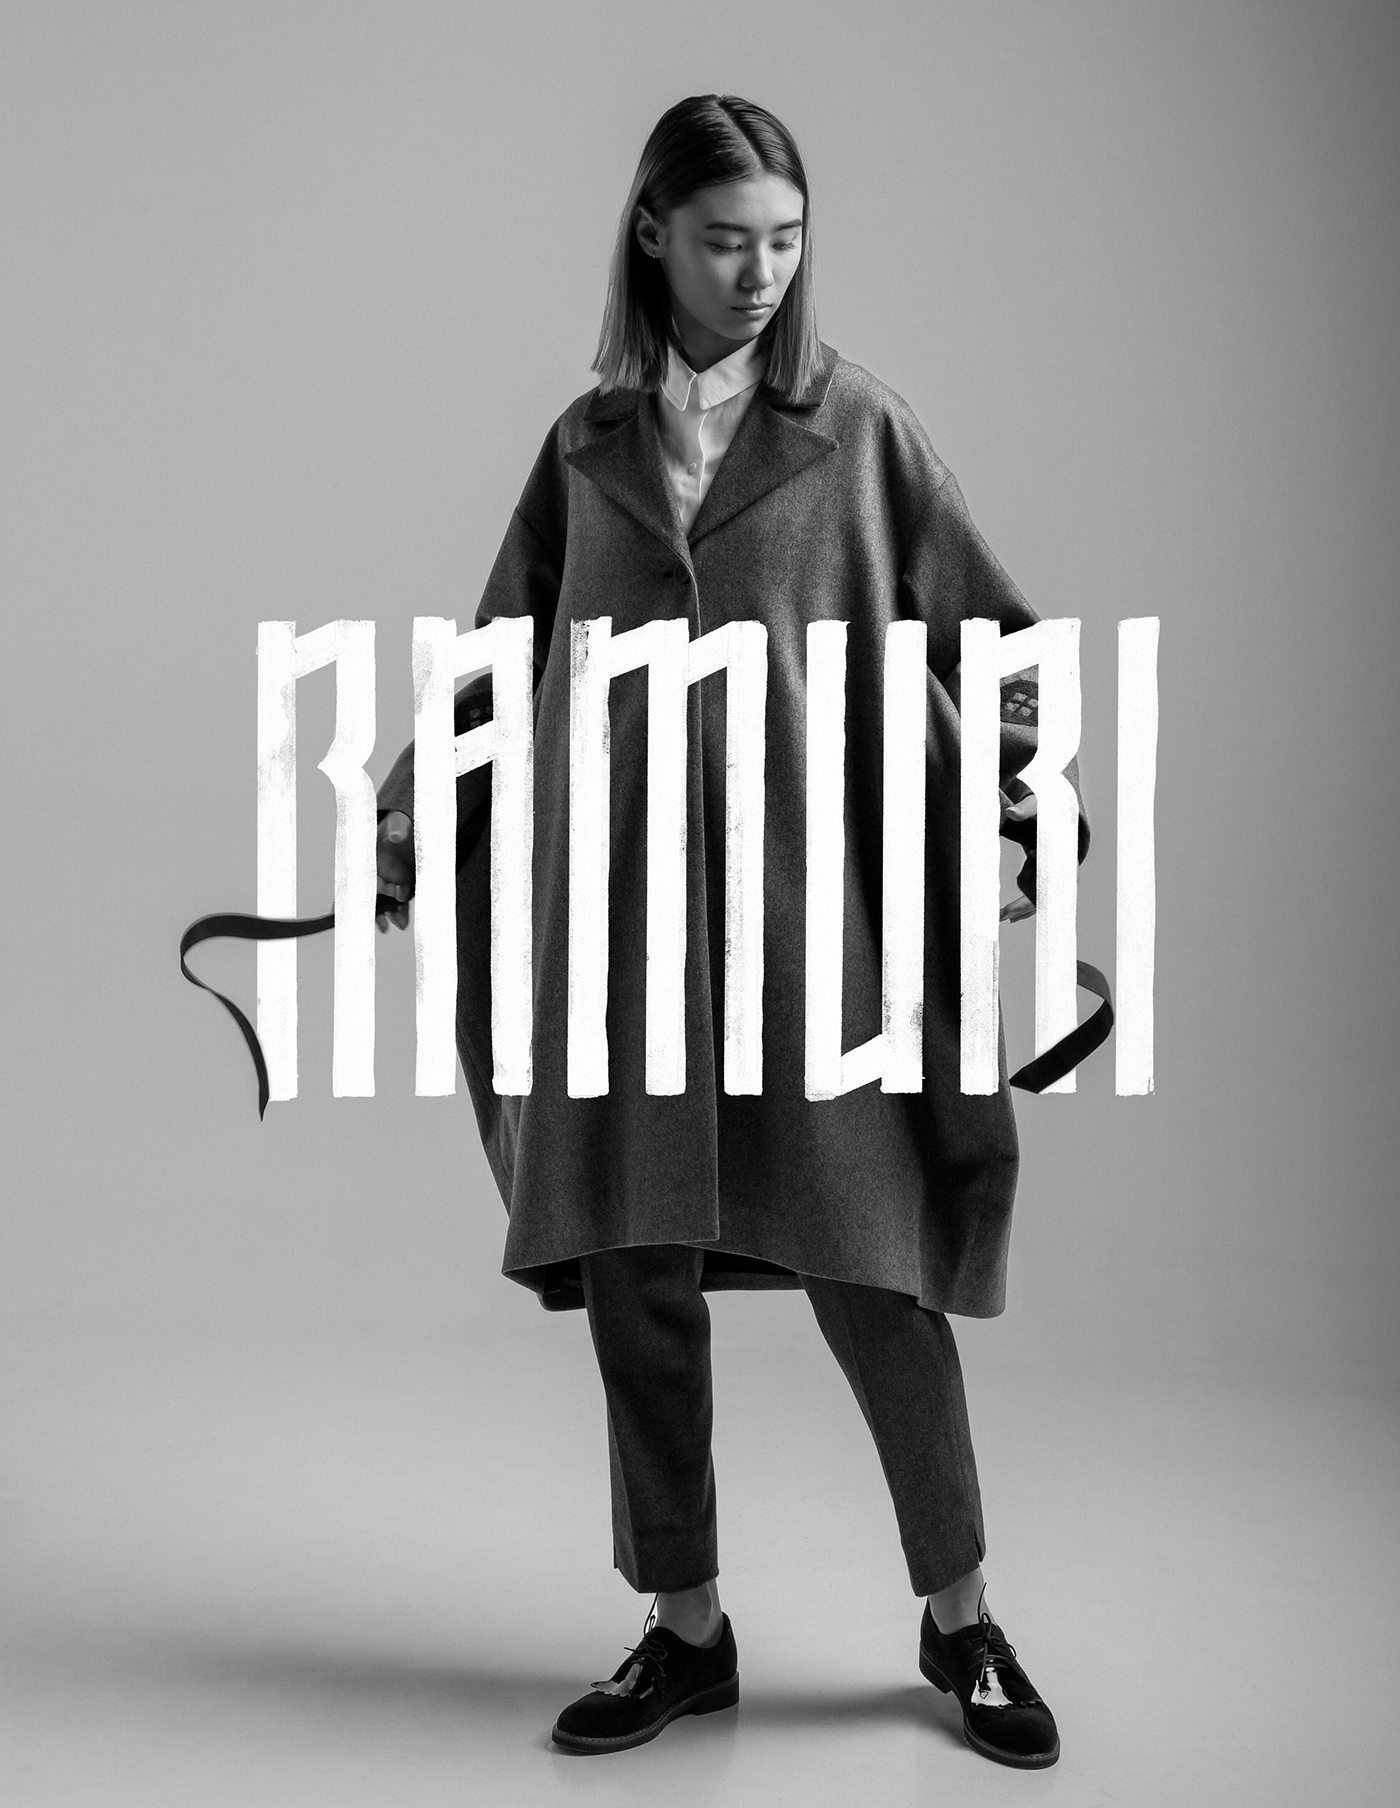 ramuri Piko Fashion  minimalist dark forest lettering Calligraphy   branding  black